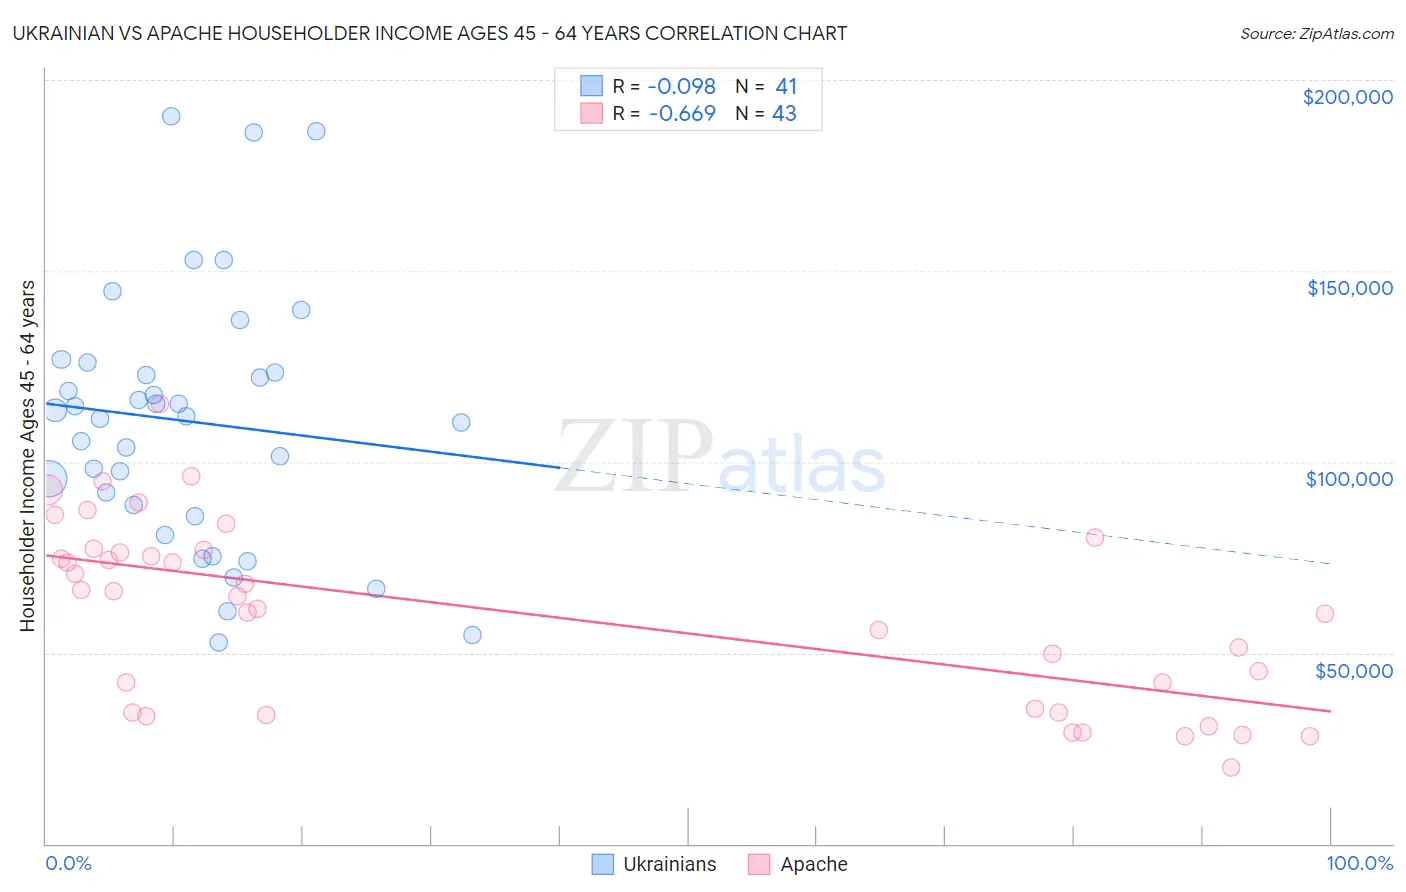 Ukrainian vs Apache Householder Income Ages 45 - 64 years